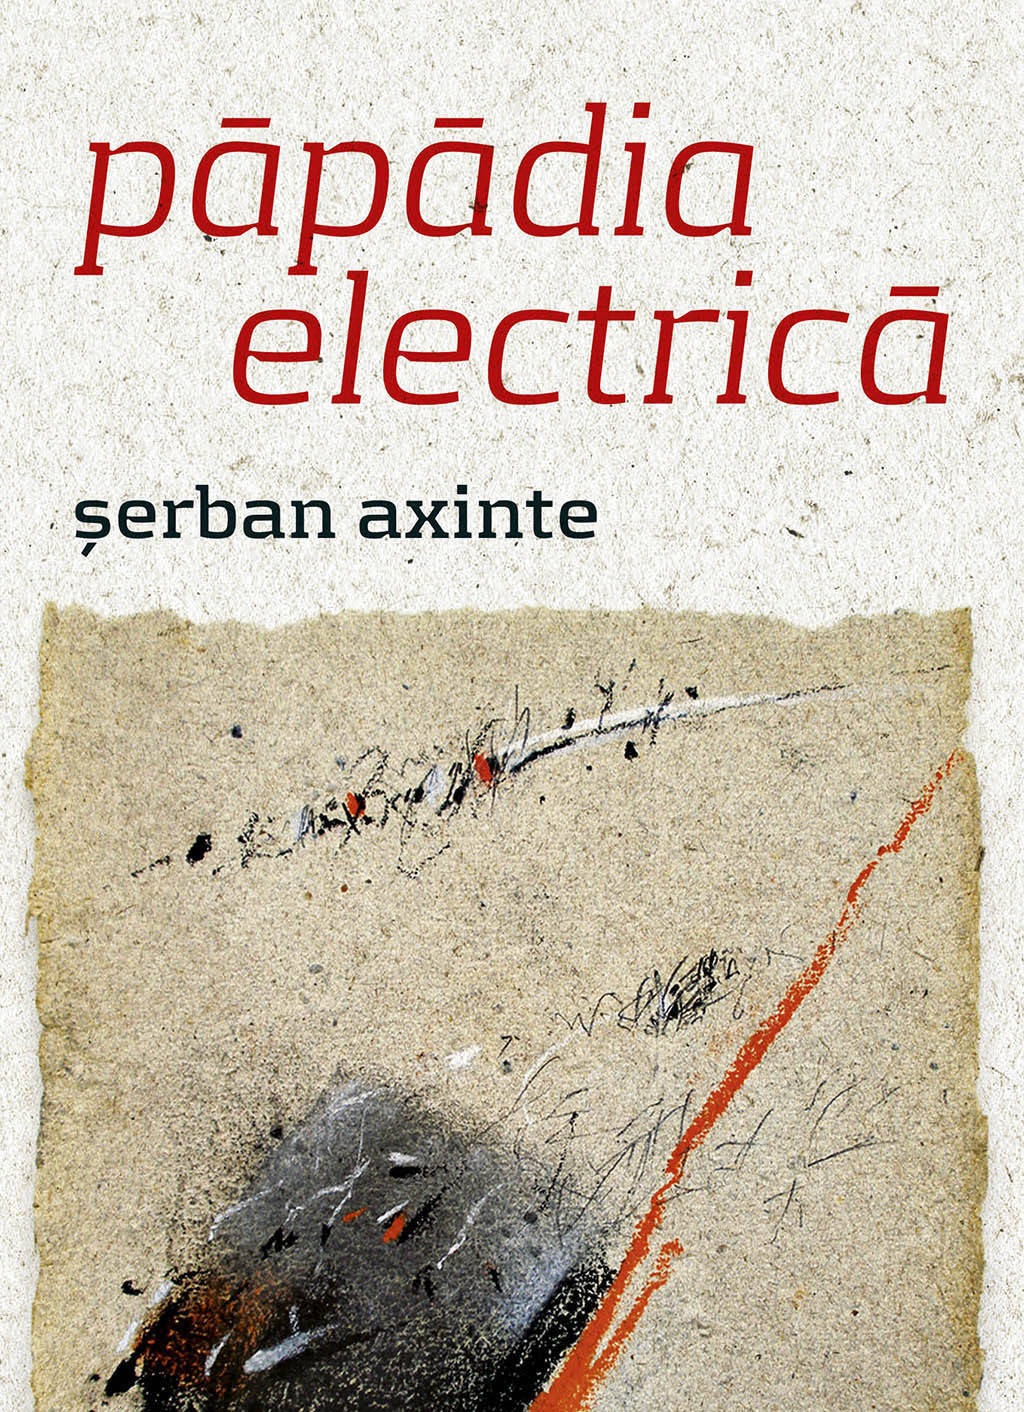 Papadia electrica - Serban Axinte